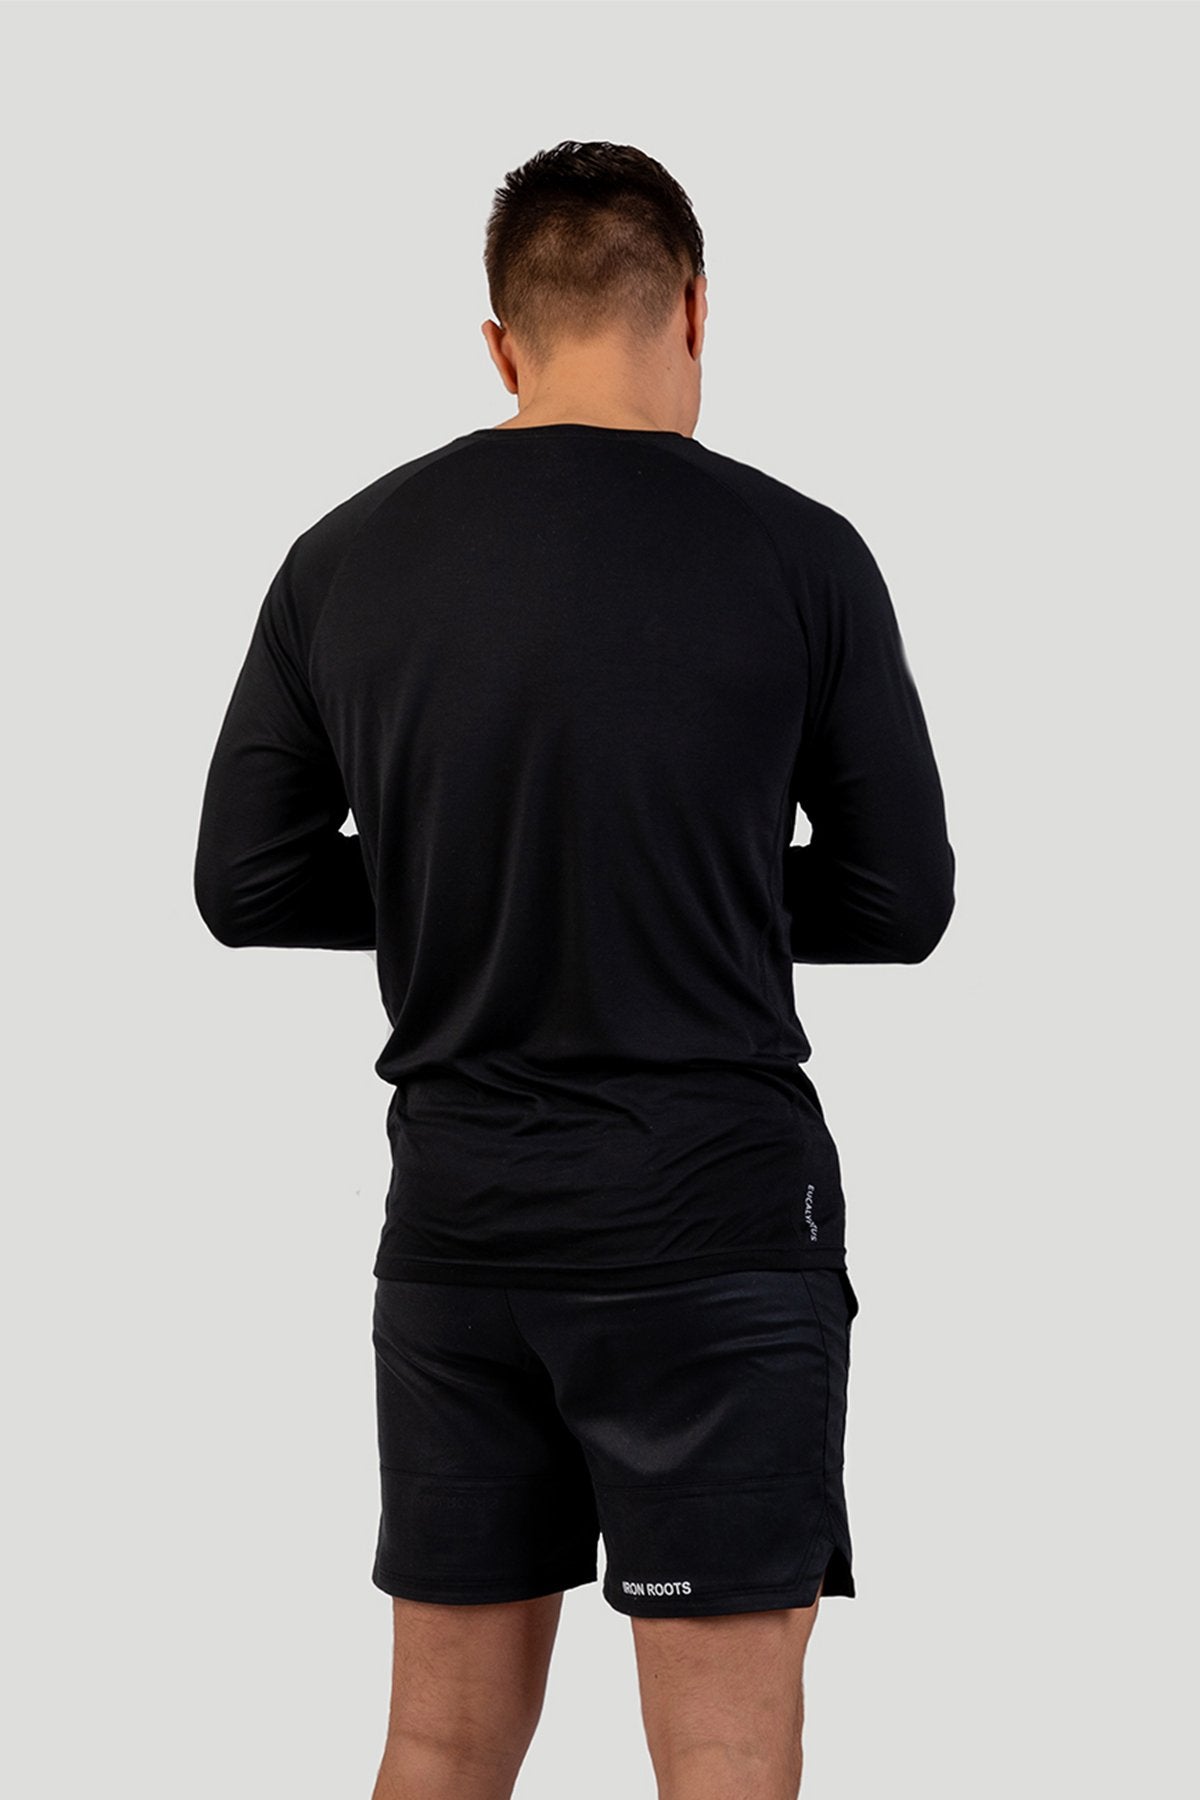 Eucalyptus Performance Longsleeve T-Shirt Black